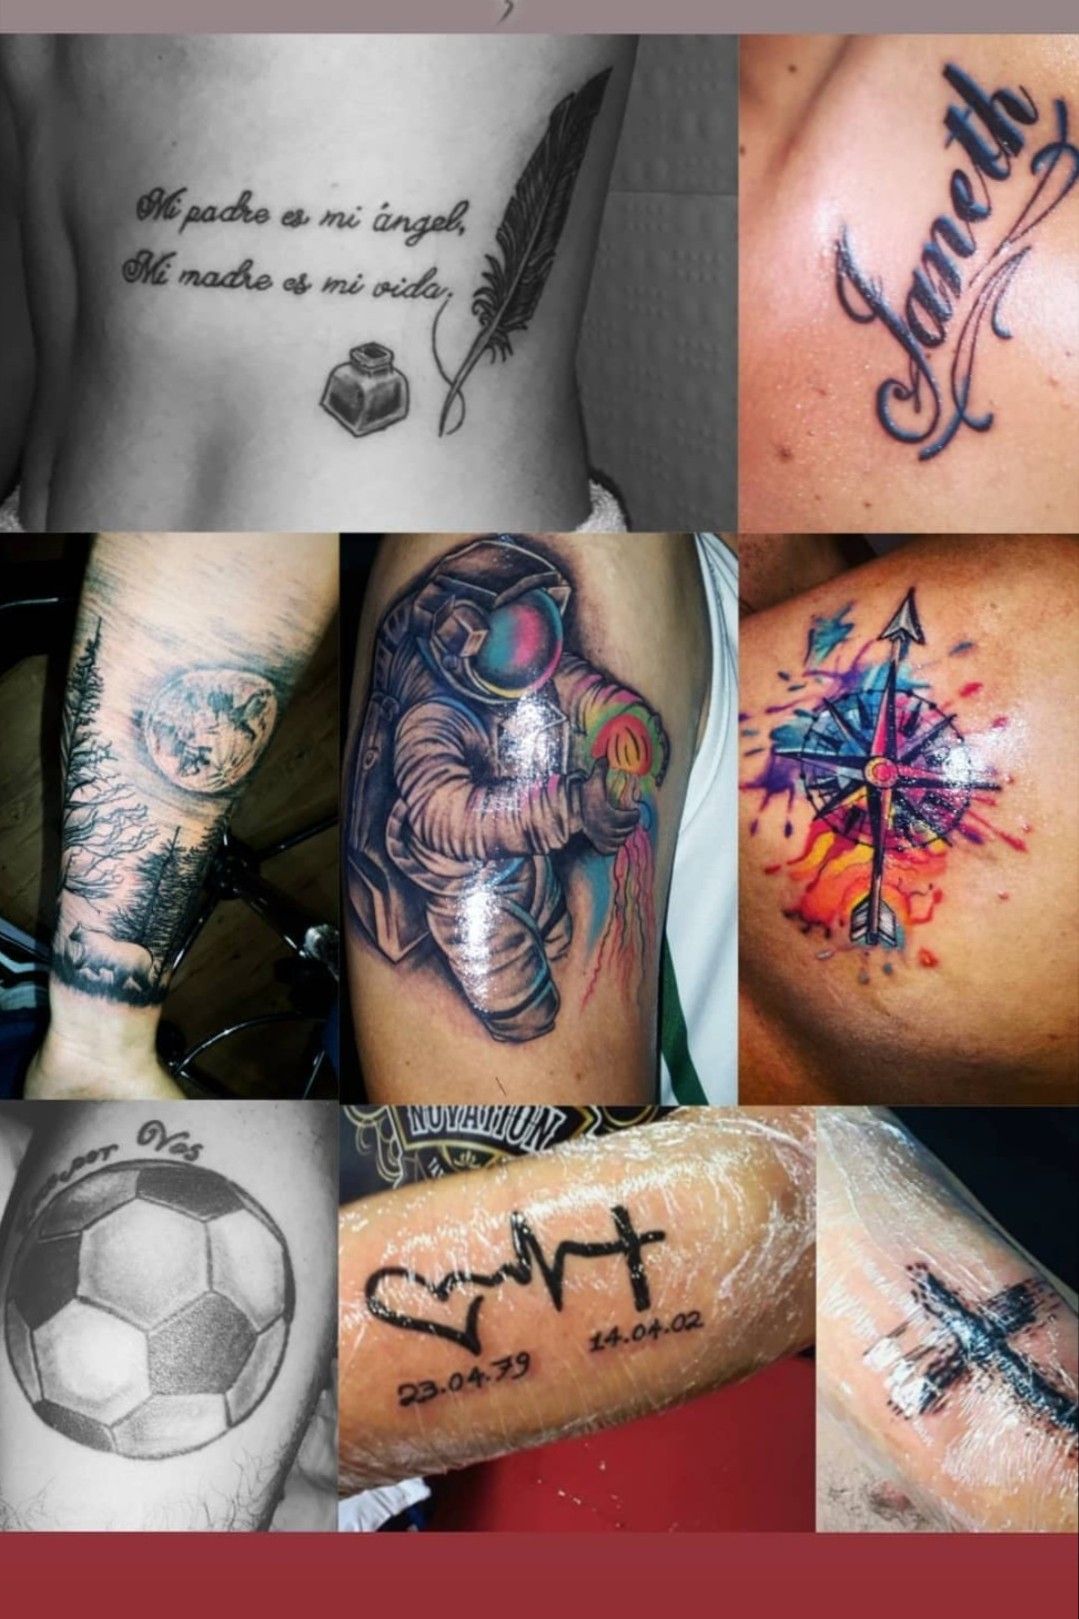 Tattoo uploaded by Andres Hernandez • Astronauta ; Paisaje dark ; Flor del  viento ; Nombre ; Frase padre madre ; futbol ; Cruz ; vida muerte  #Astronauta ; #Paisaje #dark ; #